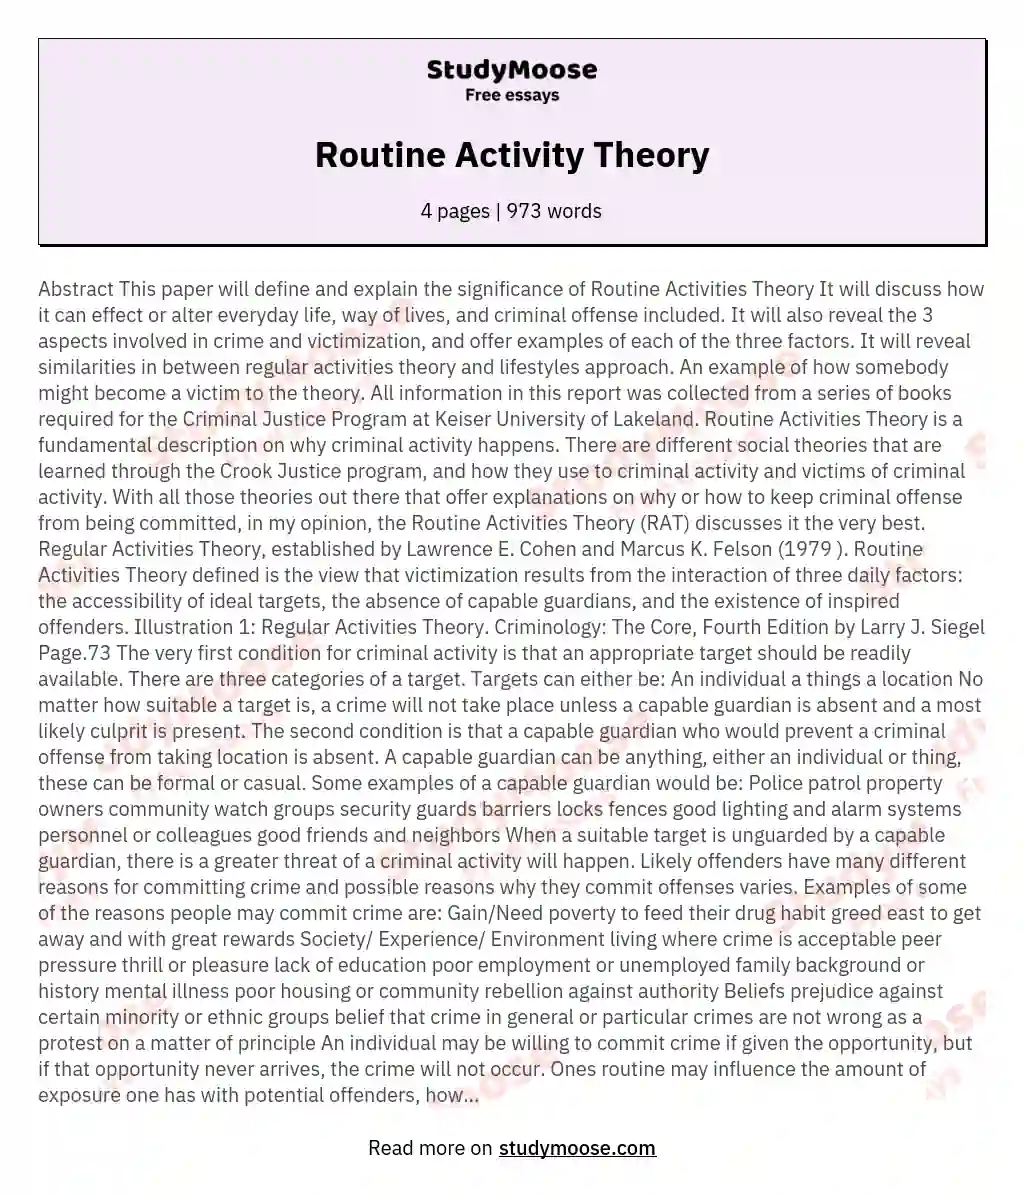 Routine Activity Theory essay